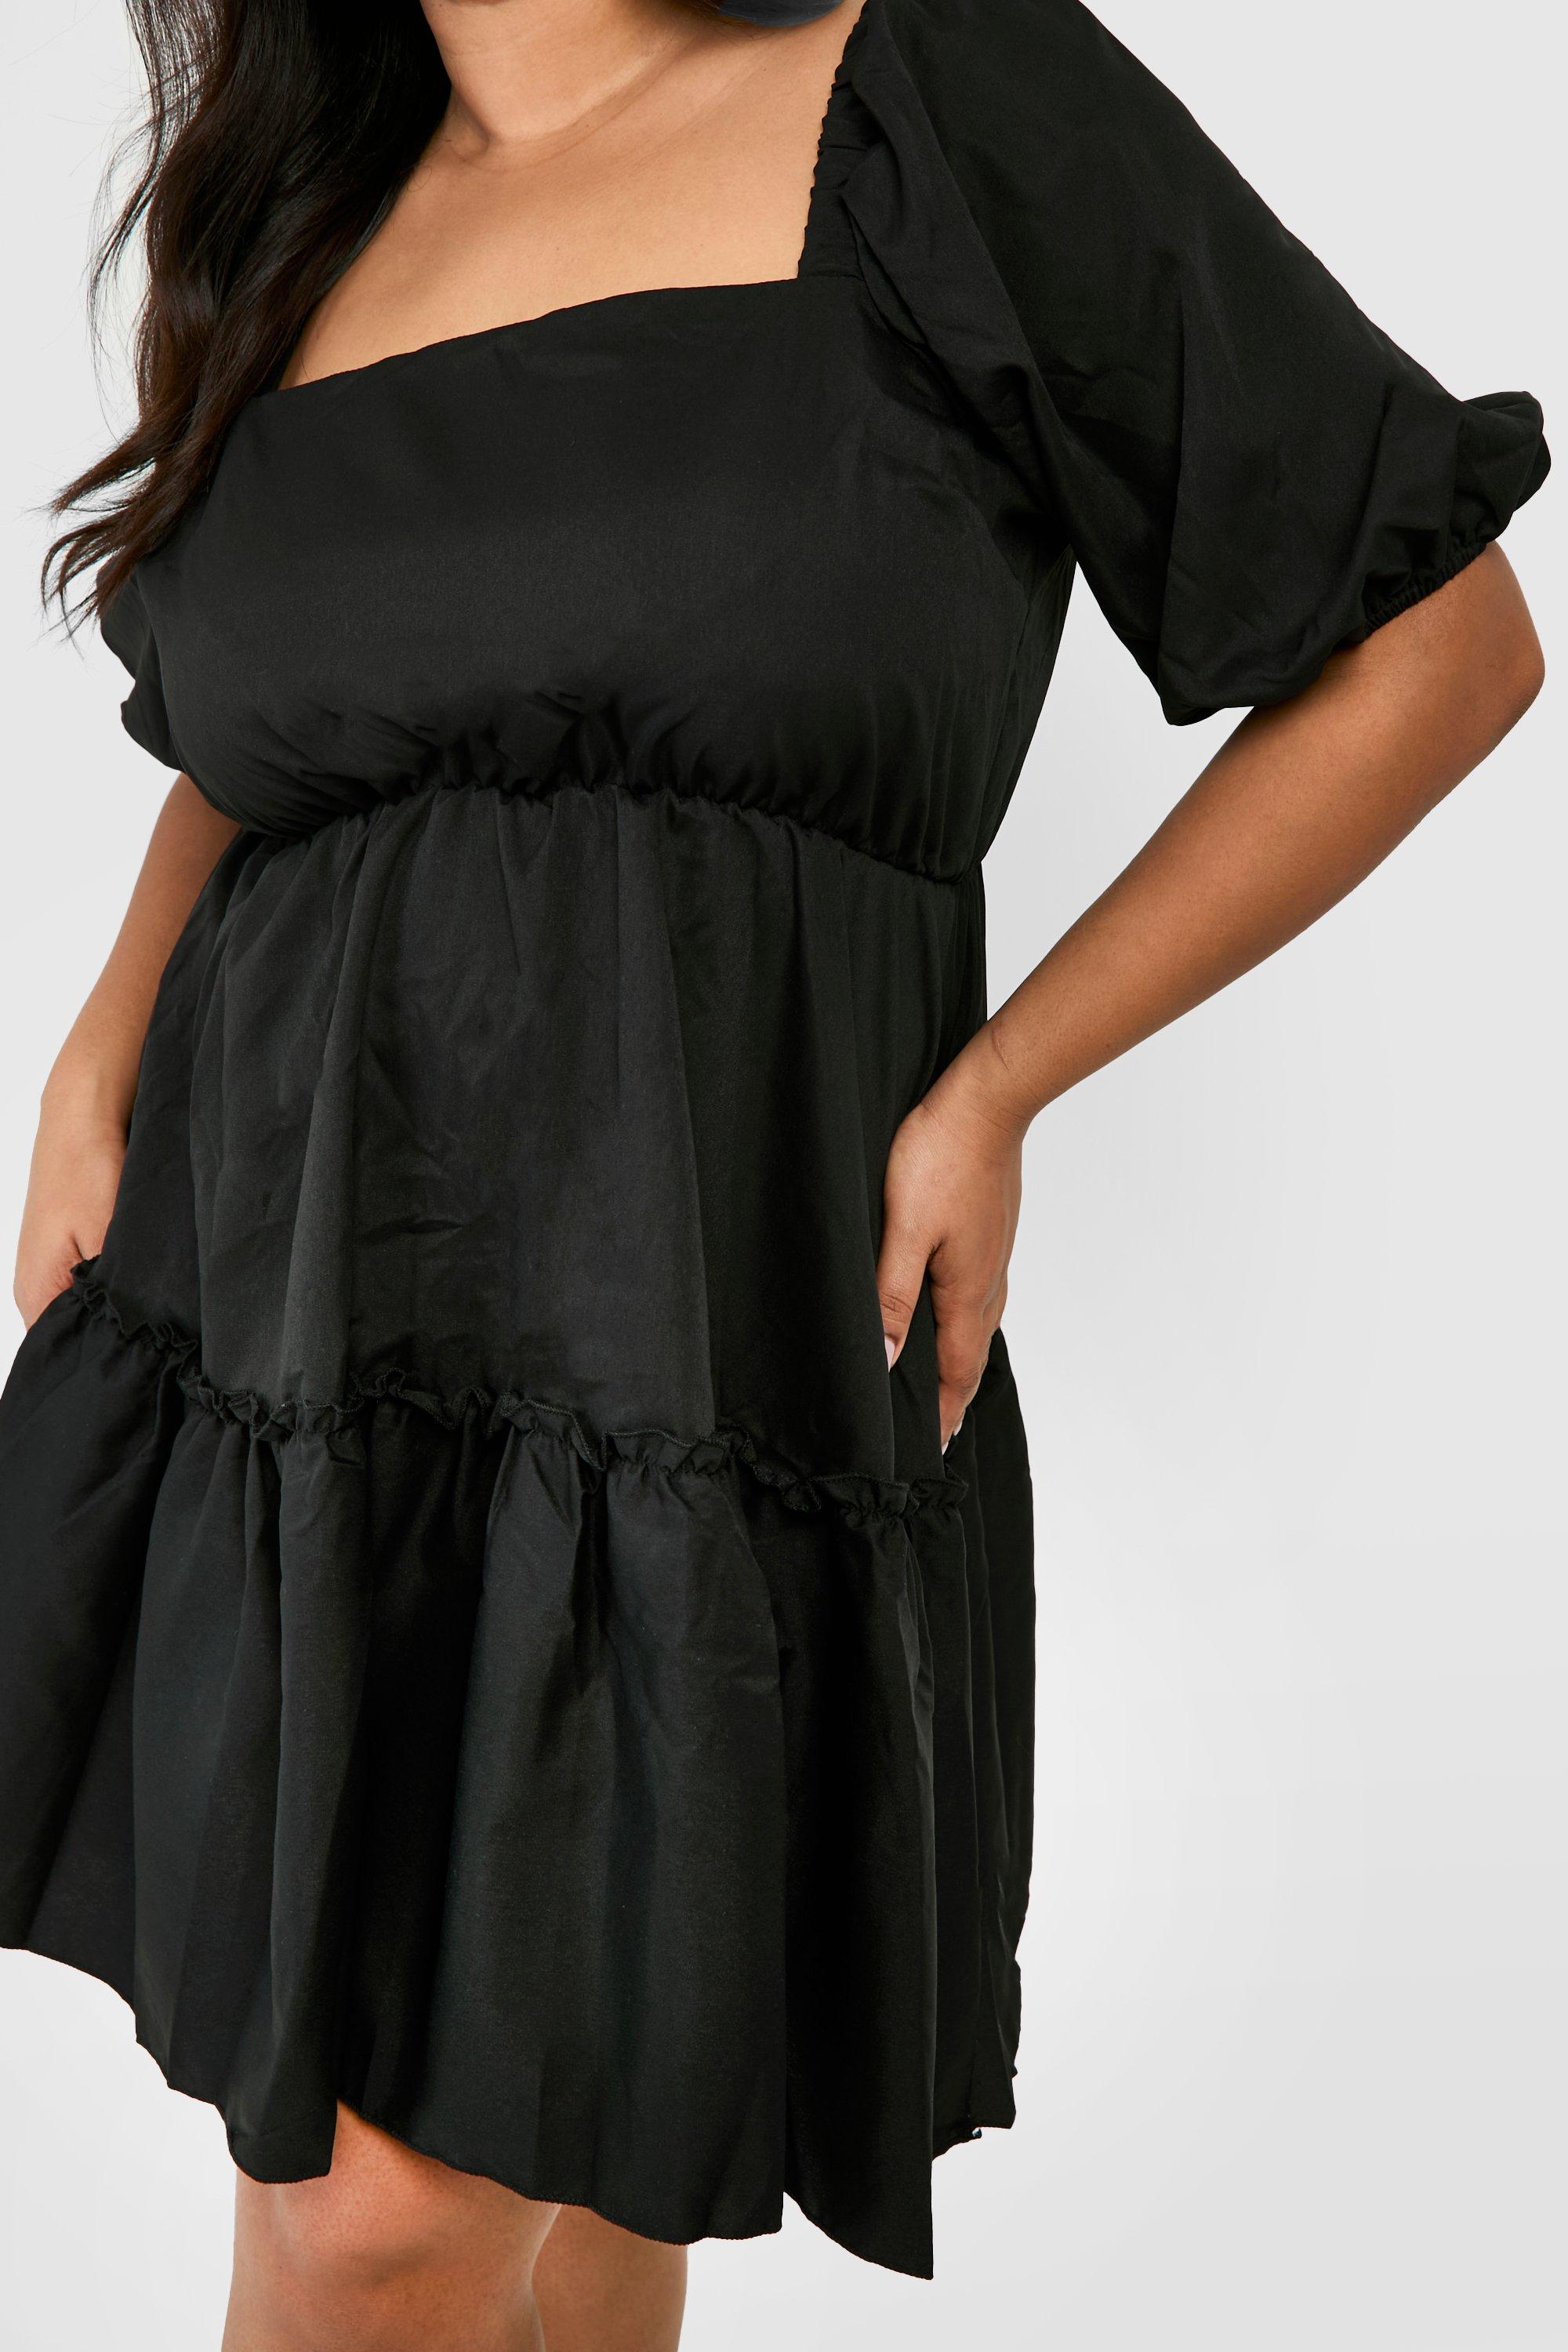 black smock dress